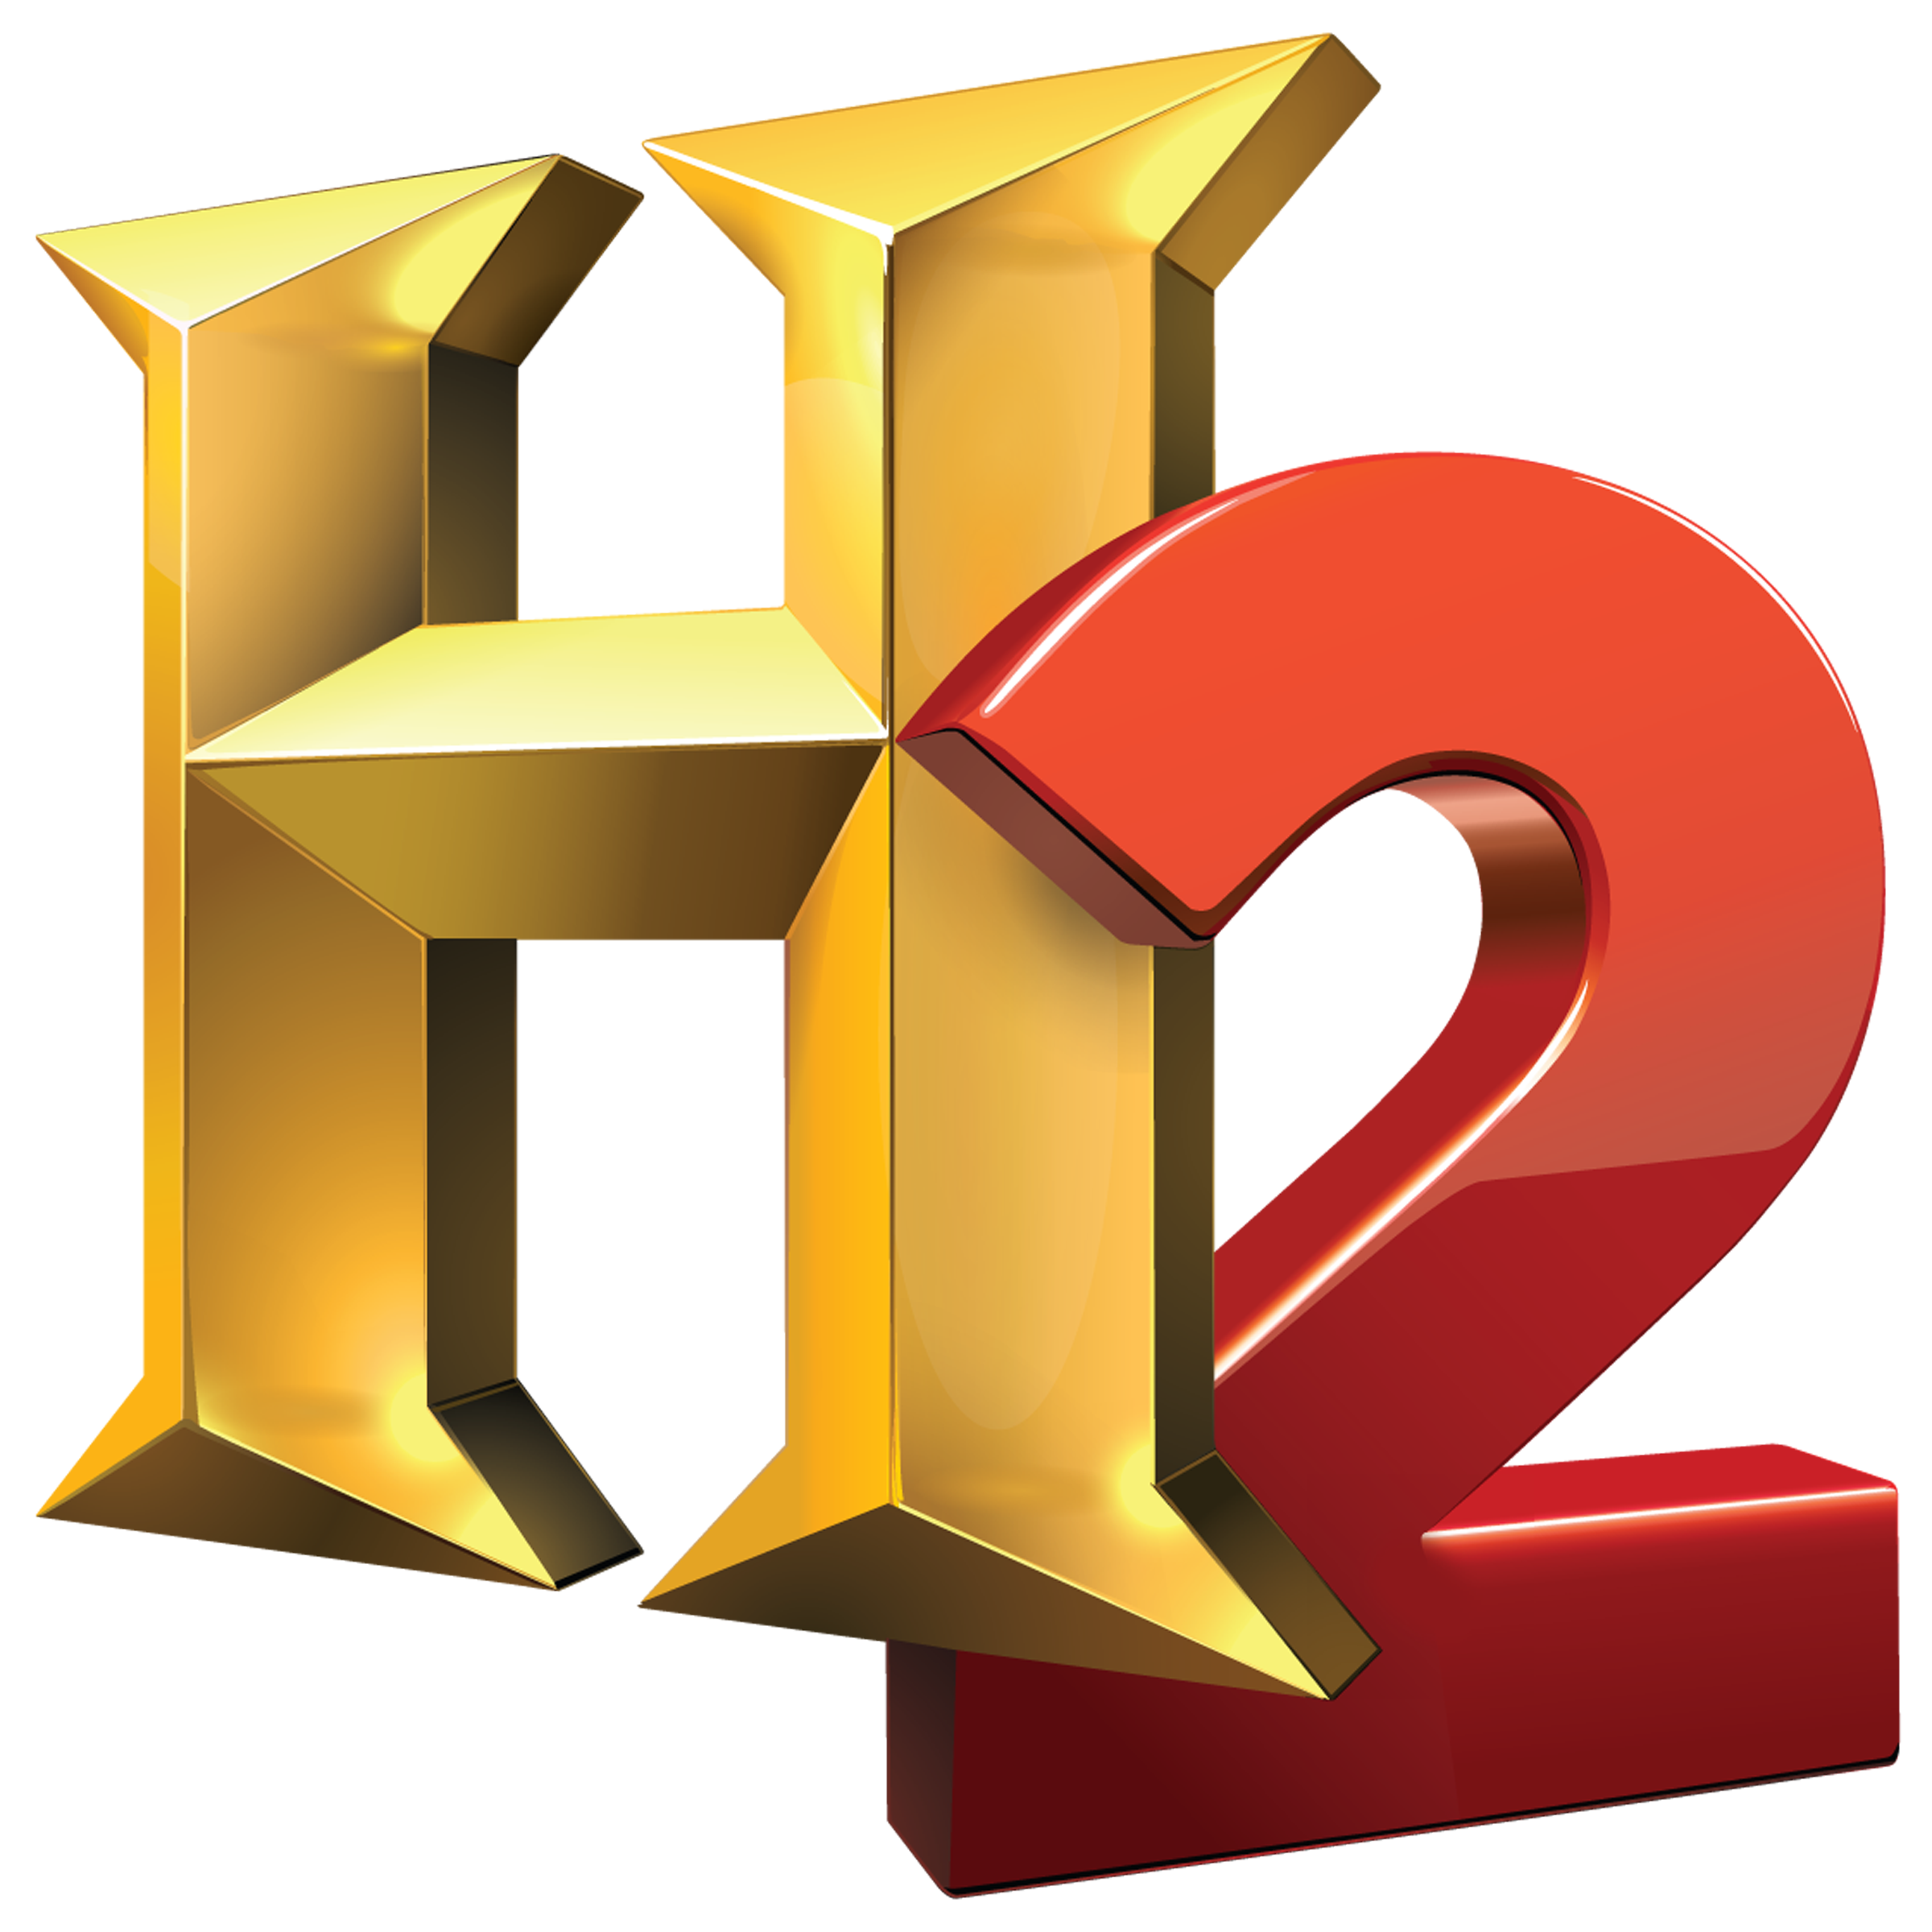 H2 (TH)